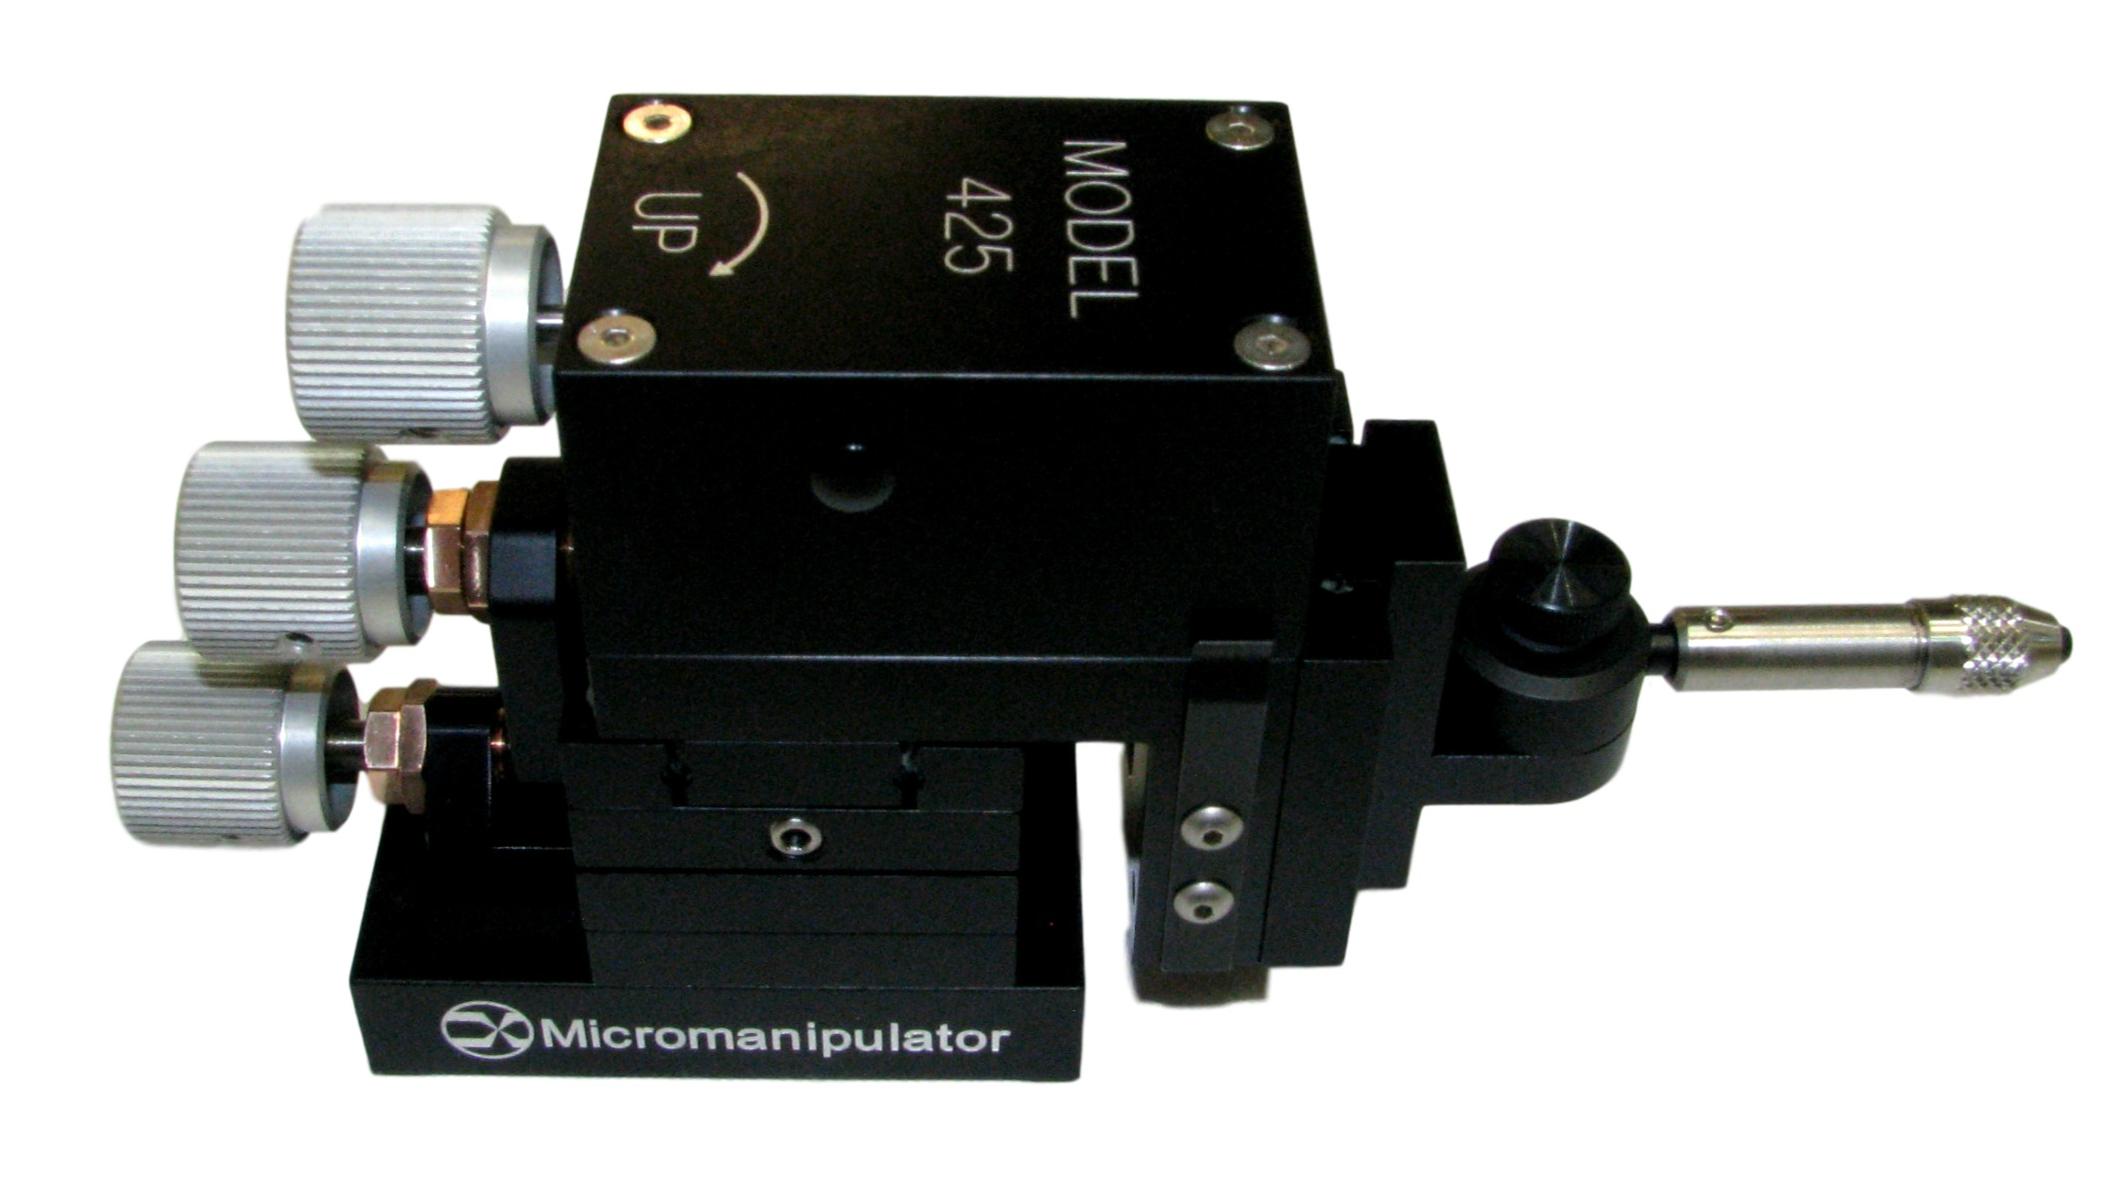 Product 425 Manipulators - Micromanipulator image